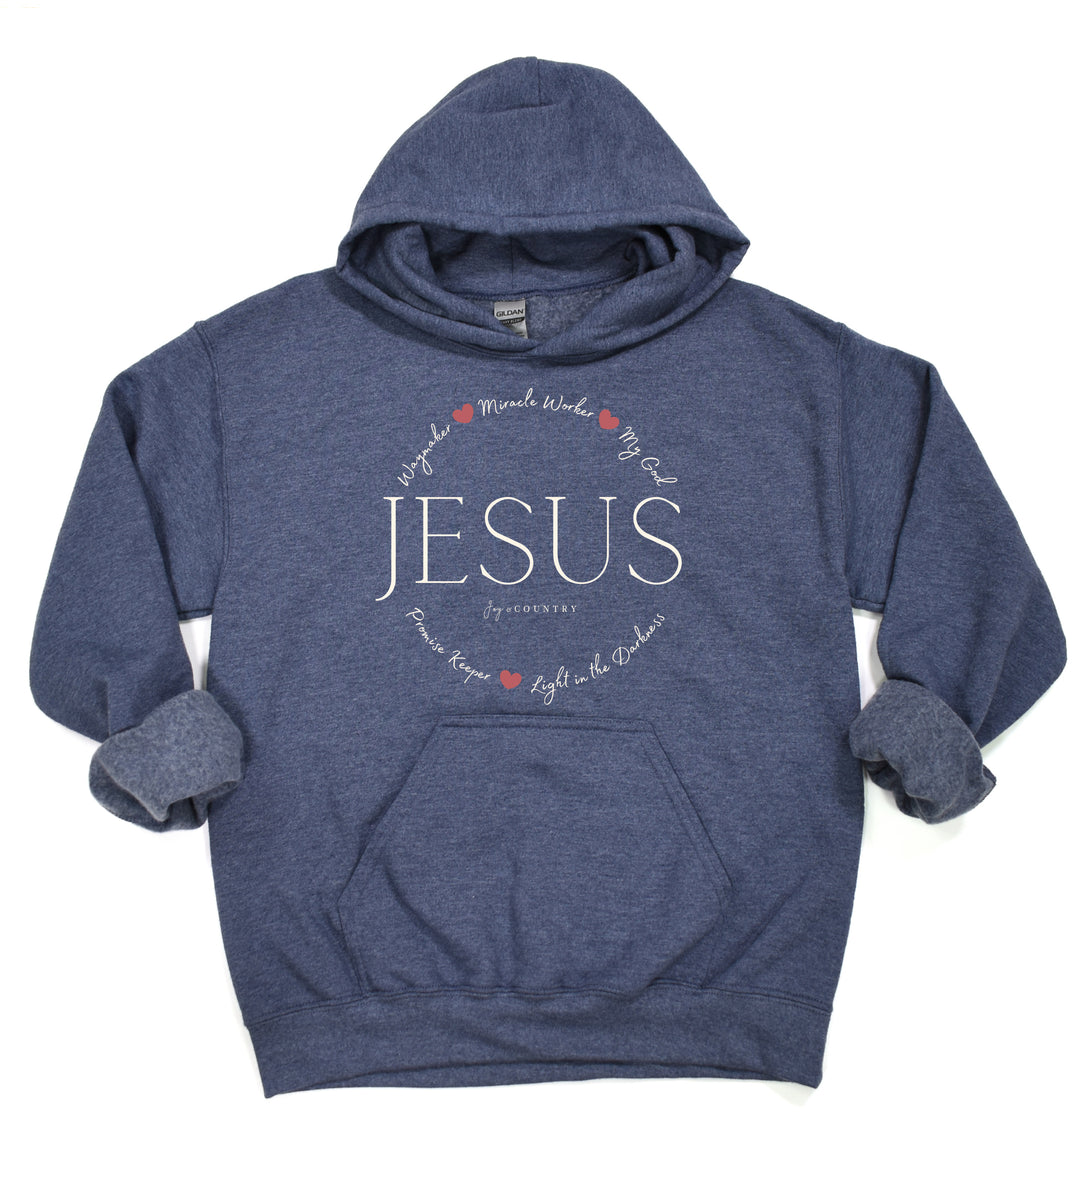 Jesus Waymaker - Unisex Hoodie Sweatshirt - Joy & Country